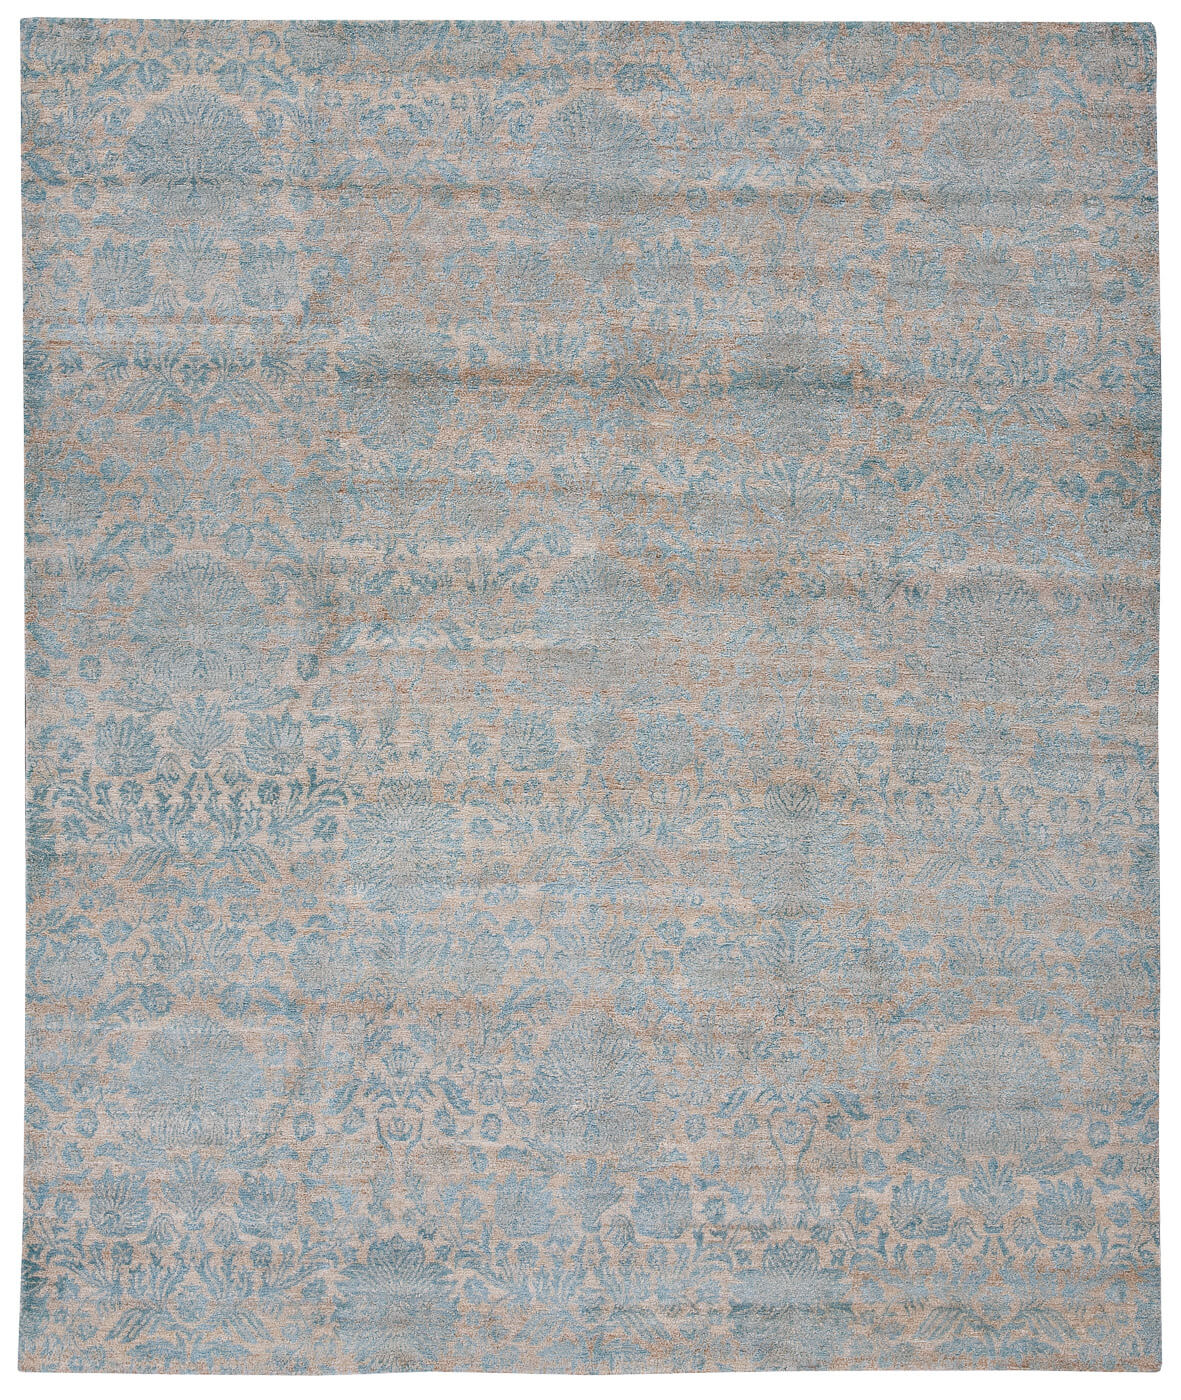 Verona Blue Luxury Hand-woven Rug ☞ Size: 300 x 400 cm